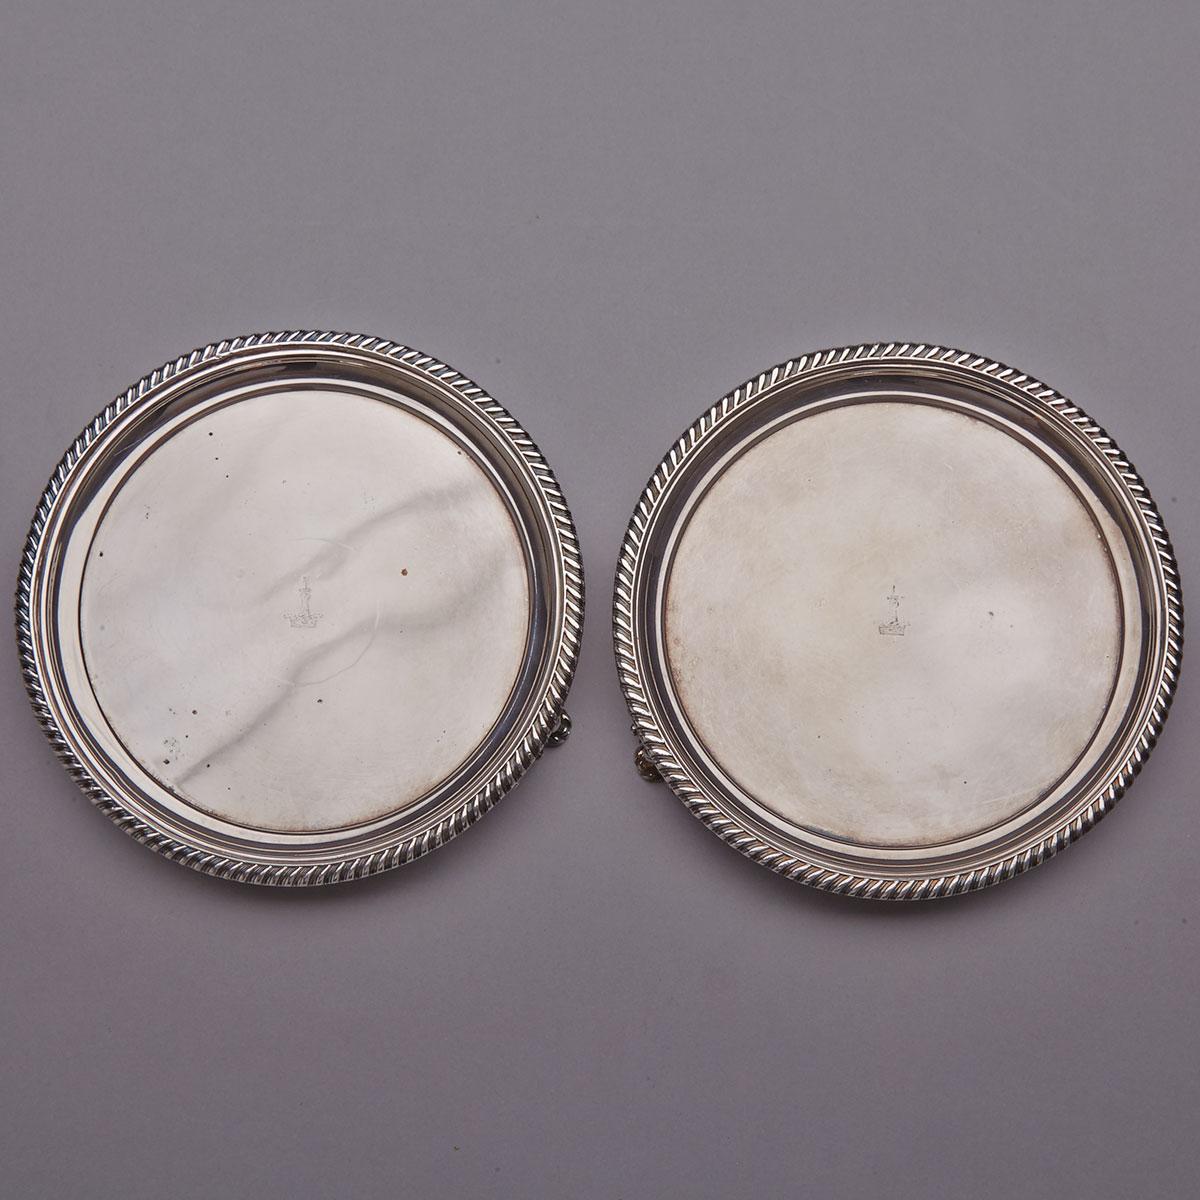 Pair of Old Sheffield Plate Circular Salvers, c.1820